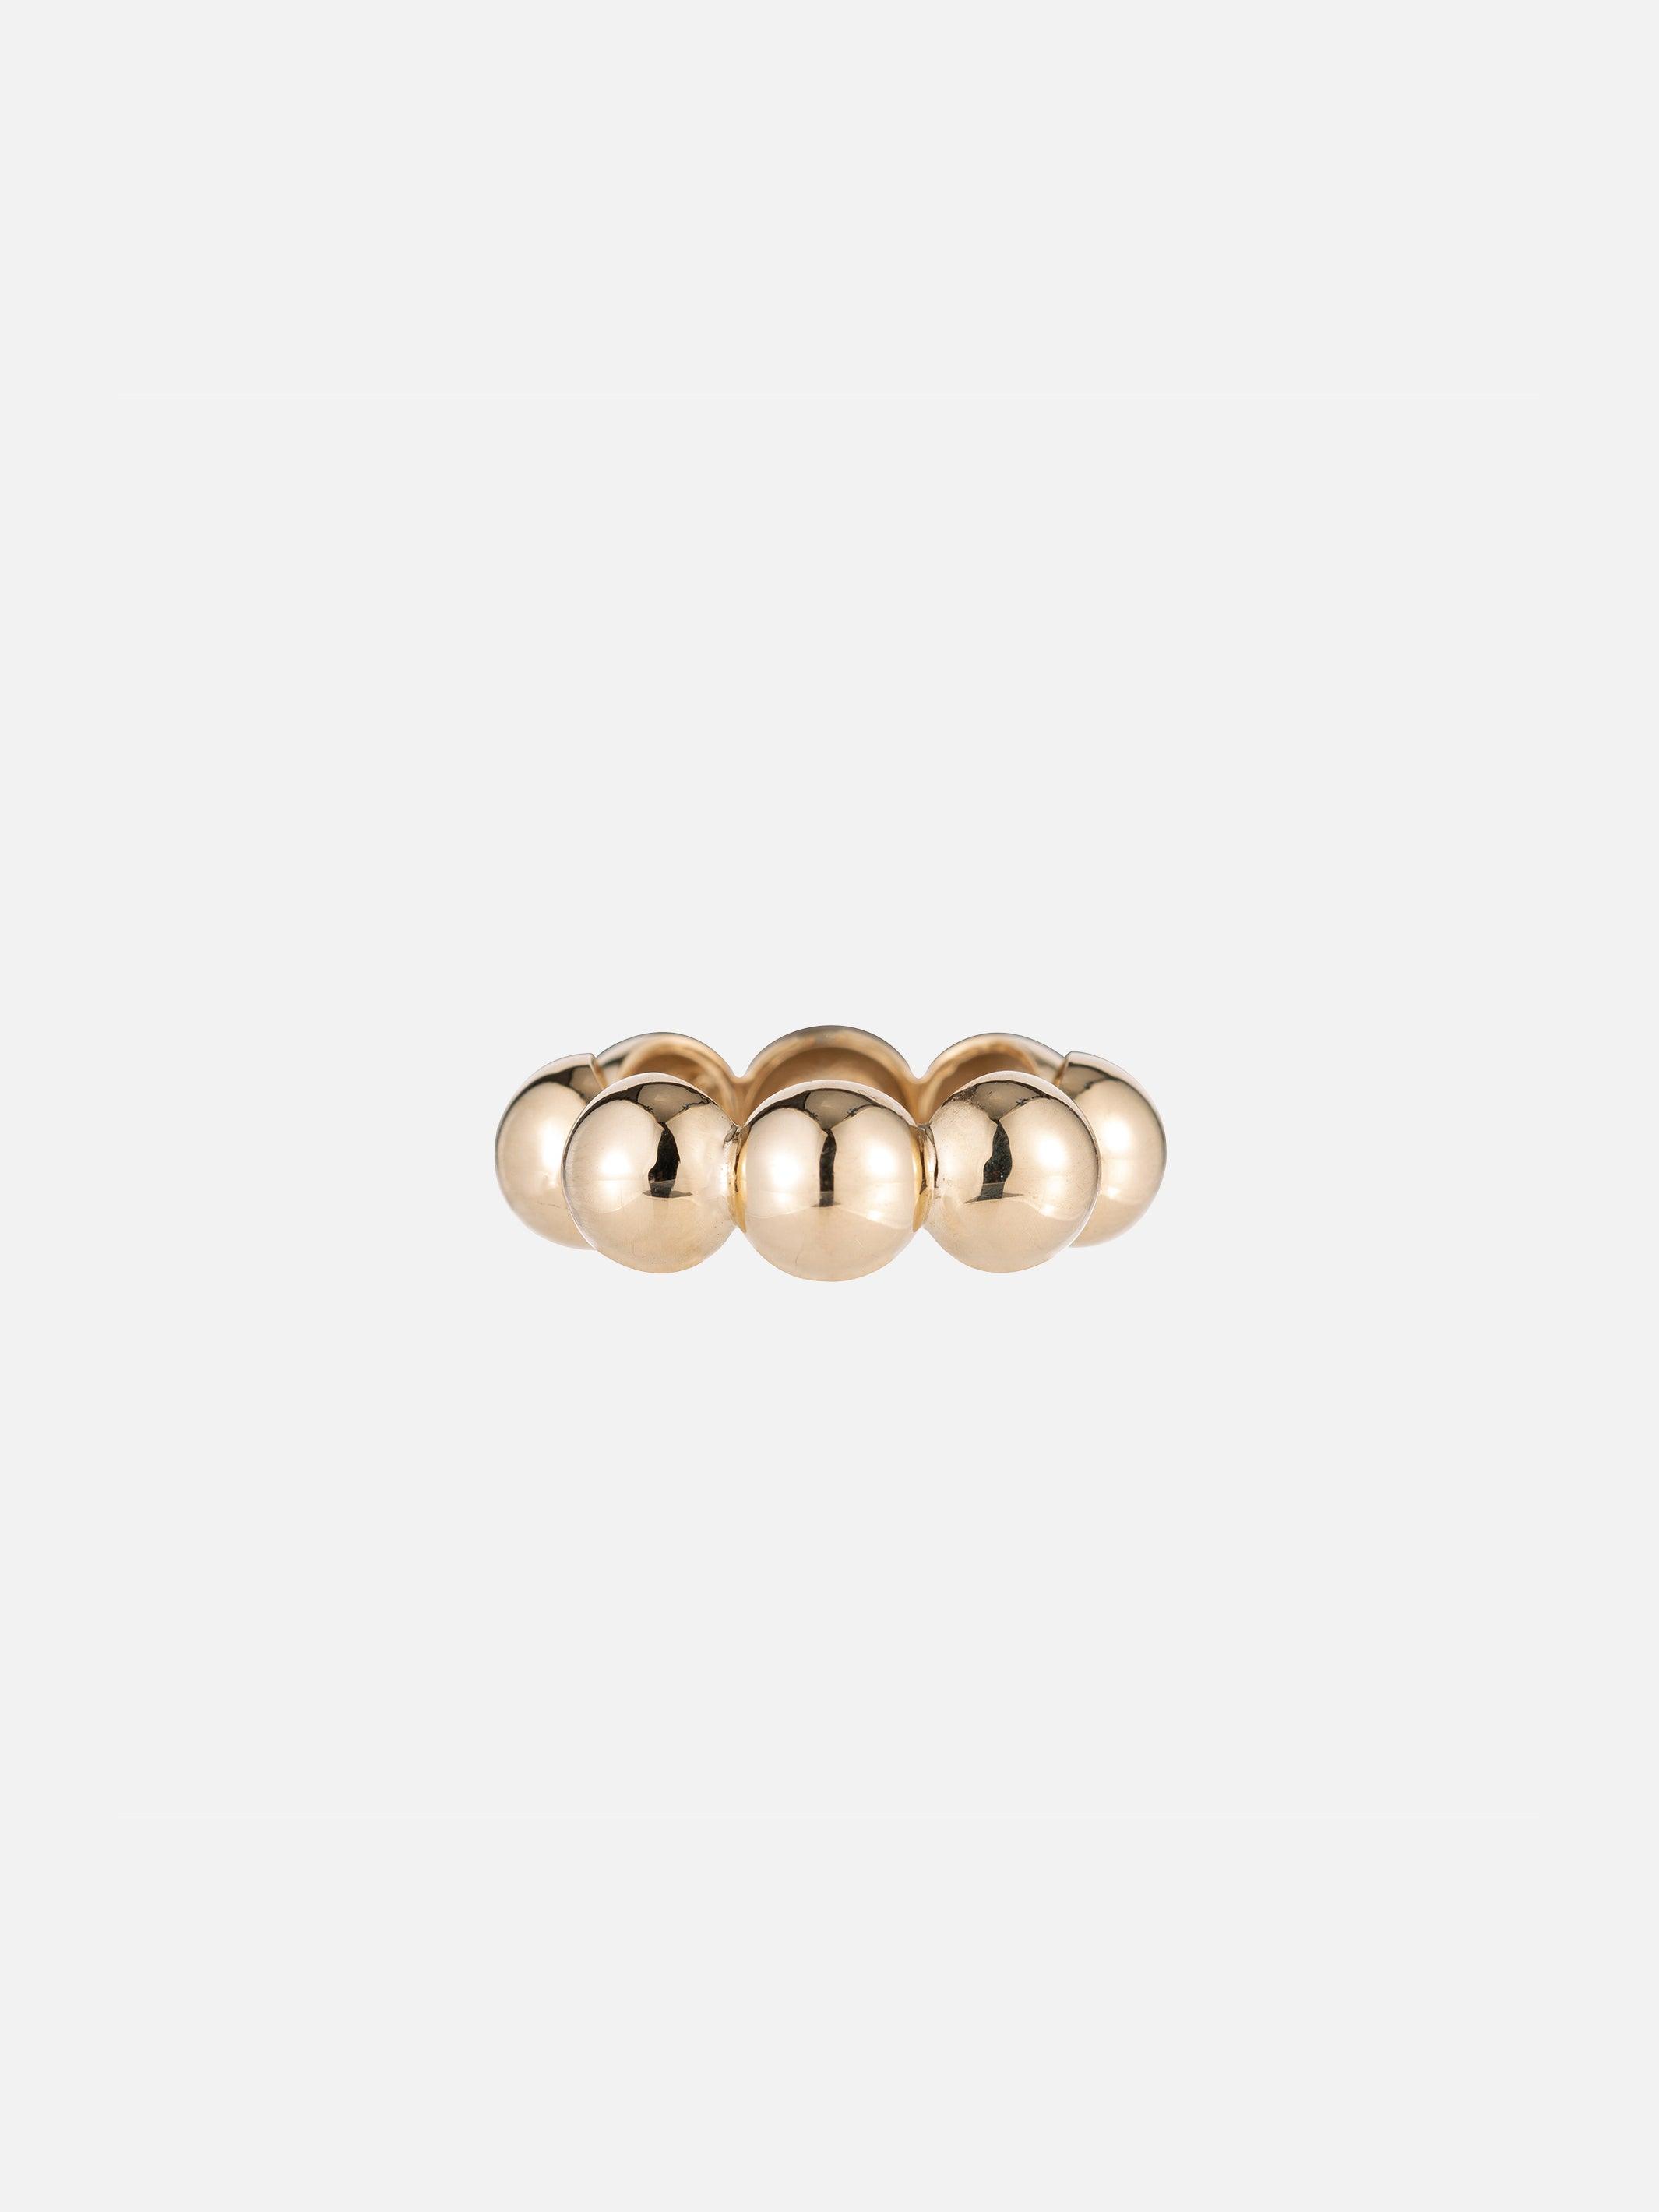 XL Bubble Ring - Ariel Gordon Jewelry - At Present